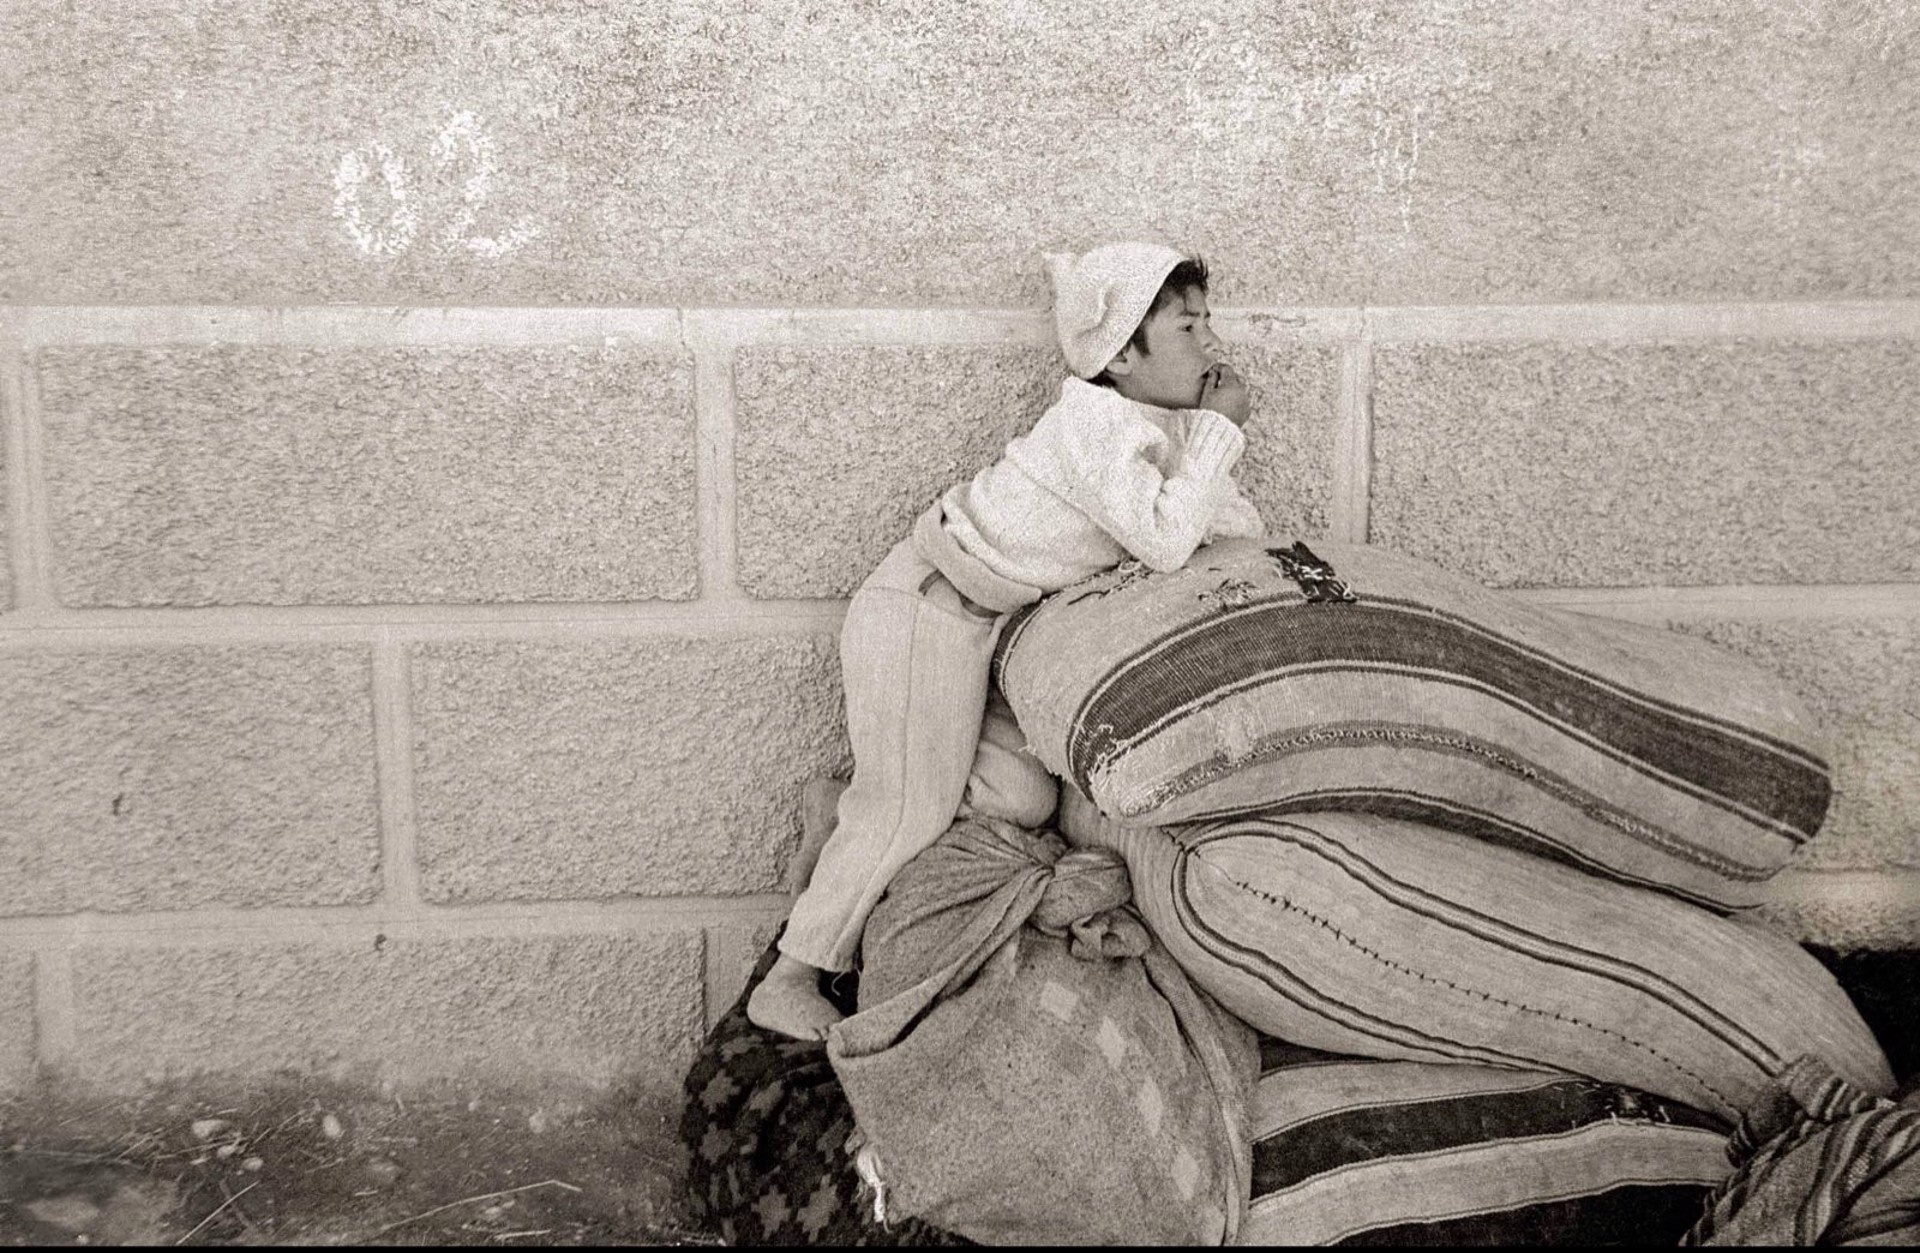 Boy on Grain Sacks, Framed (065) by Jack Dempsey